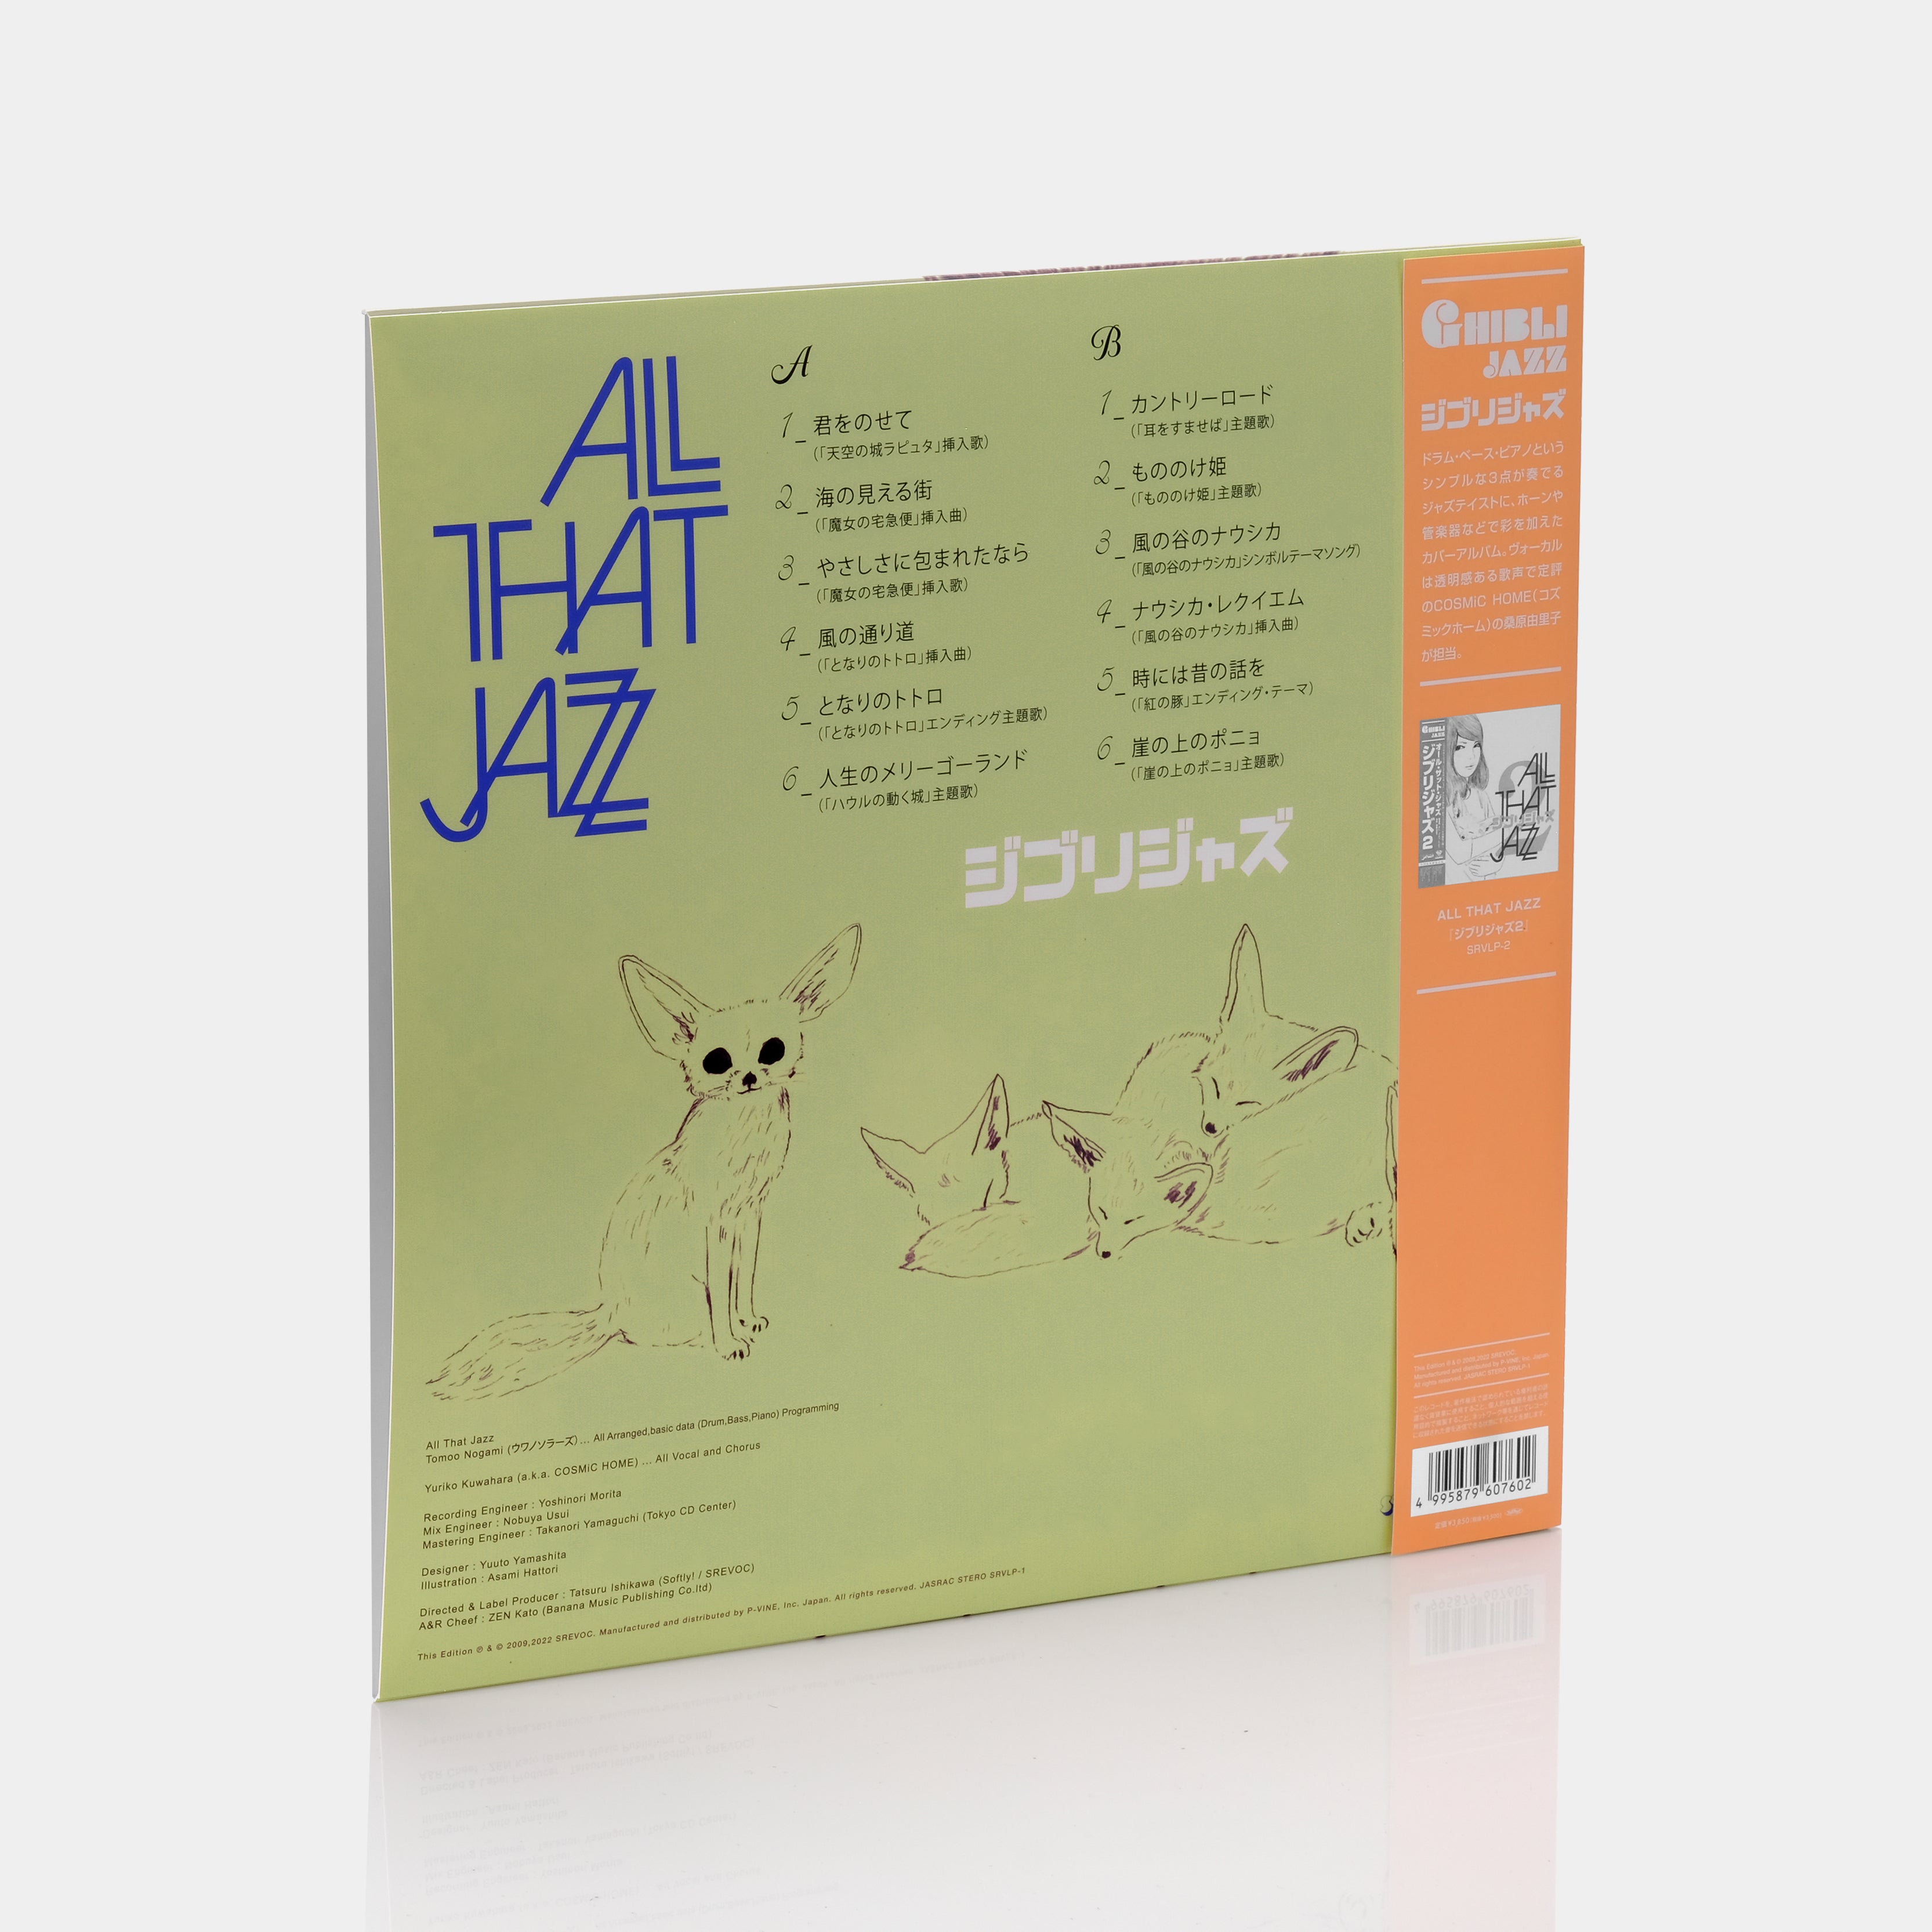 All That Jazz -  ジブリジャズ (Ghibli Jazz) LP Vinyl Record